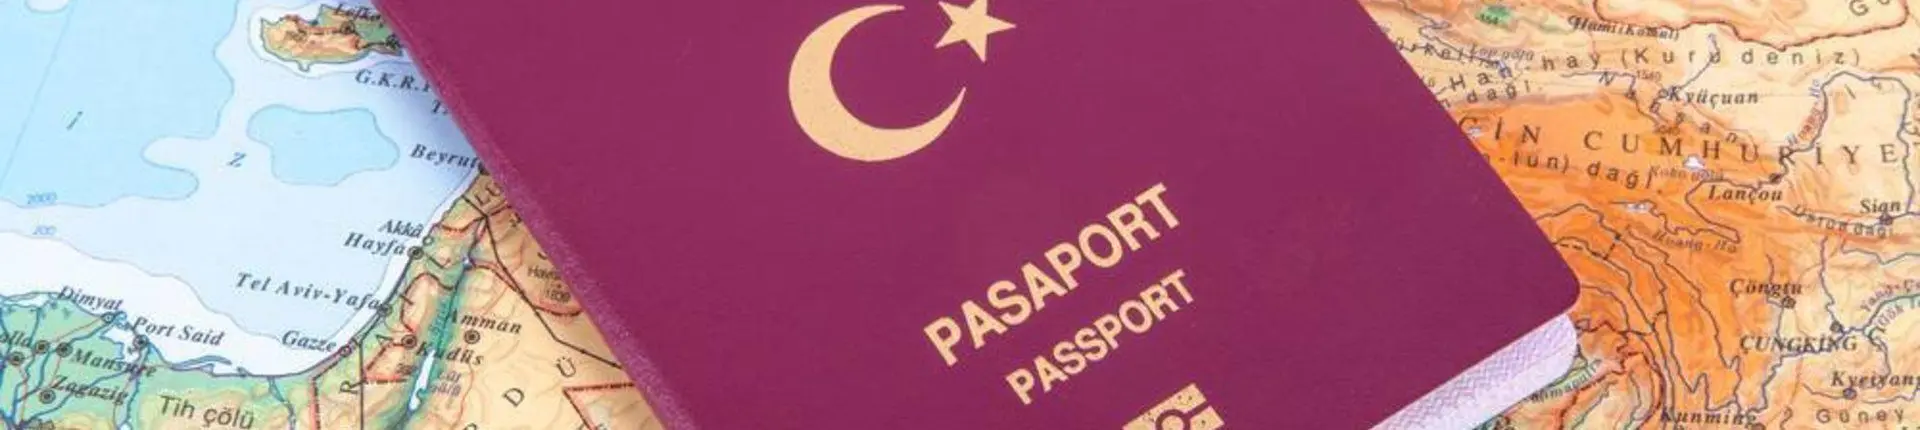 https://cdn2.enuygun.com/media/lib/1920x430/uploads/image/pasaport-15987.webp